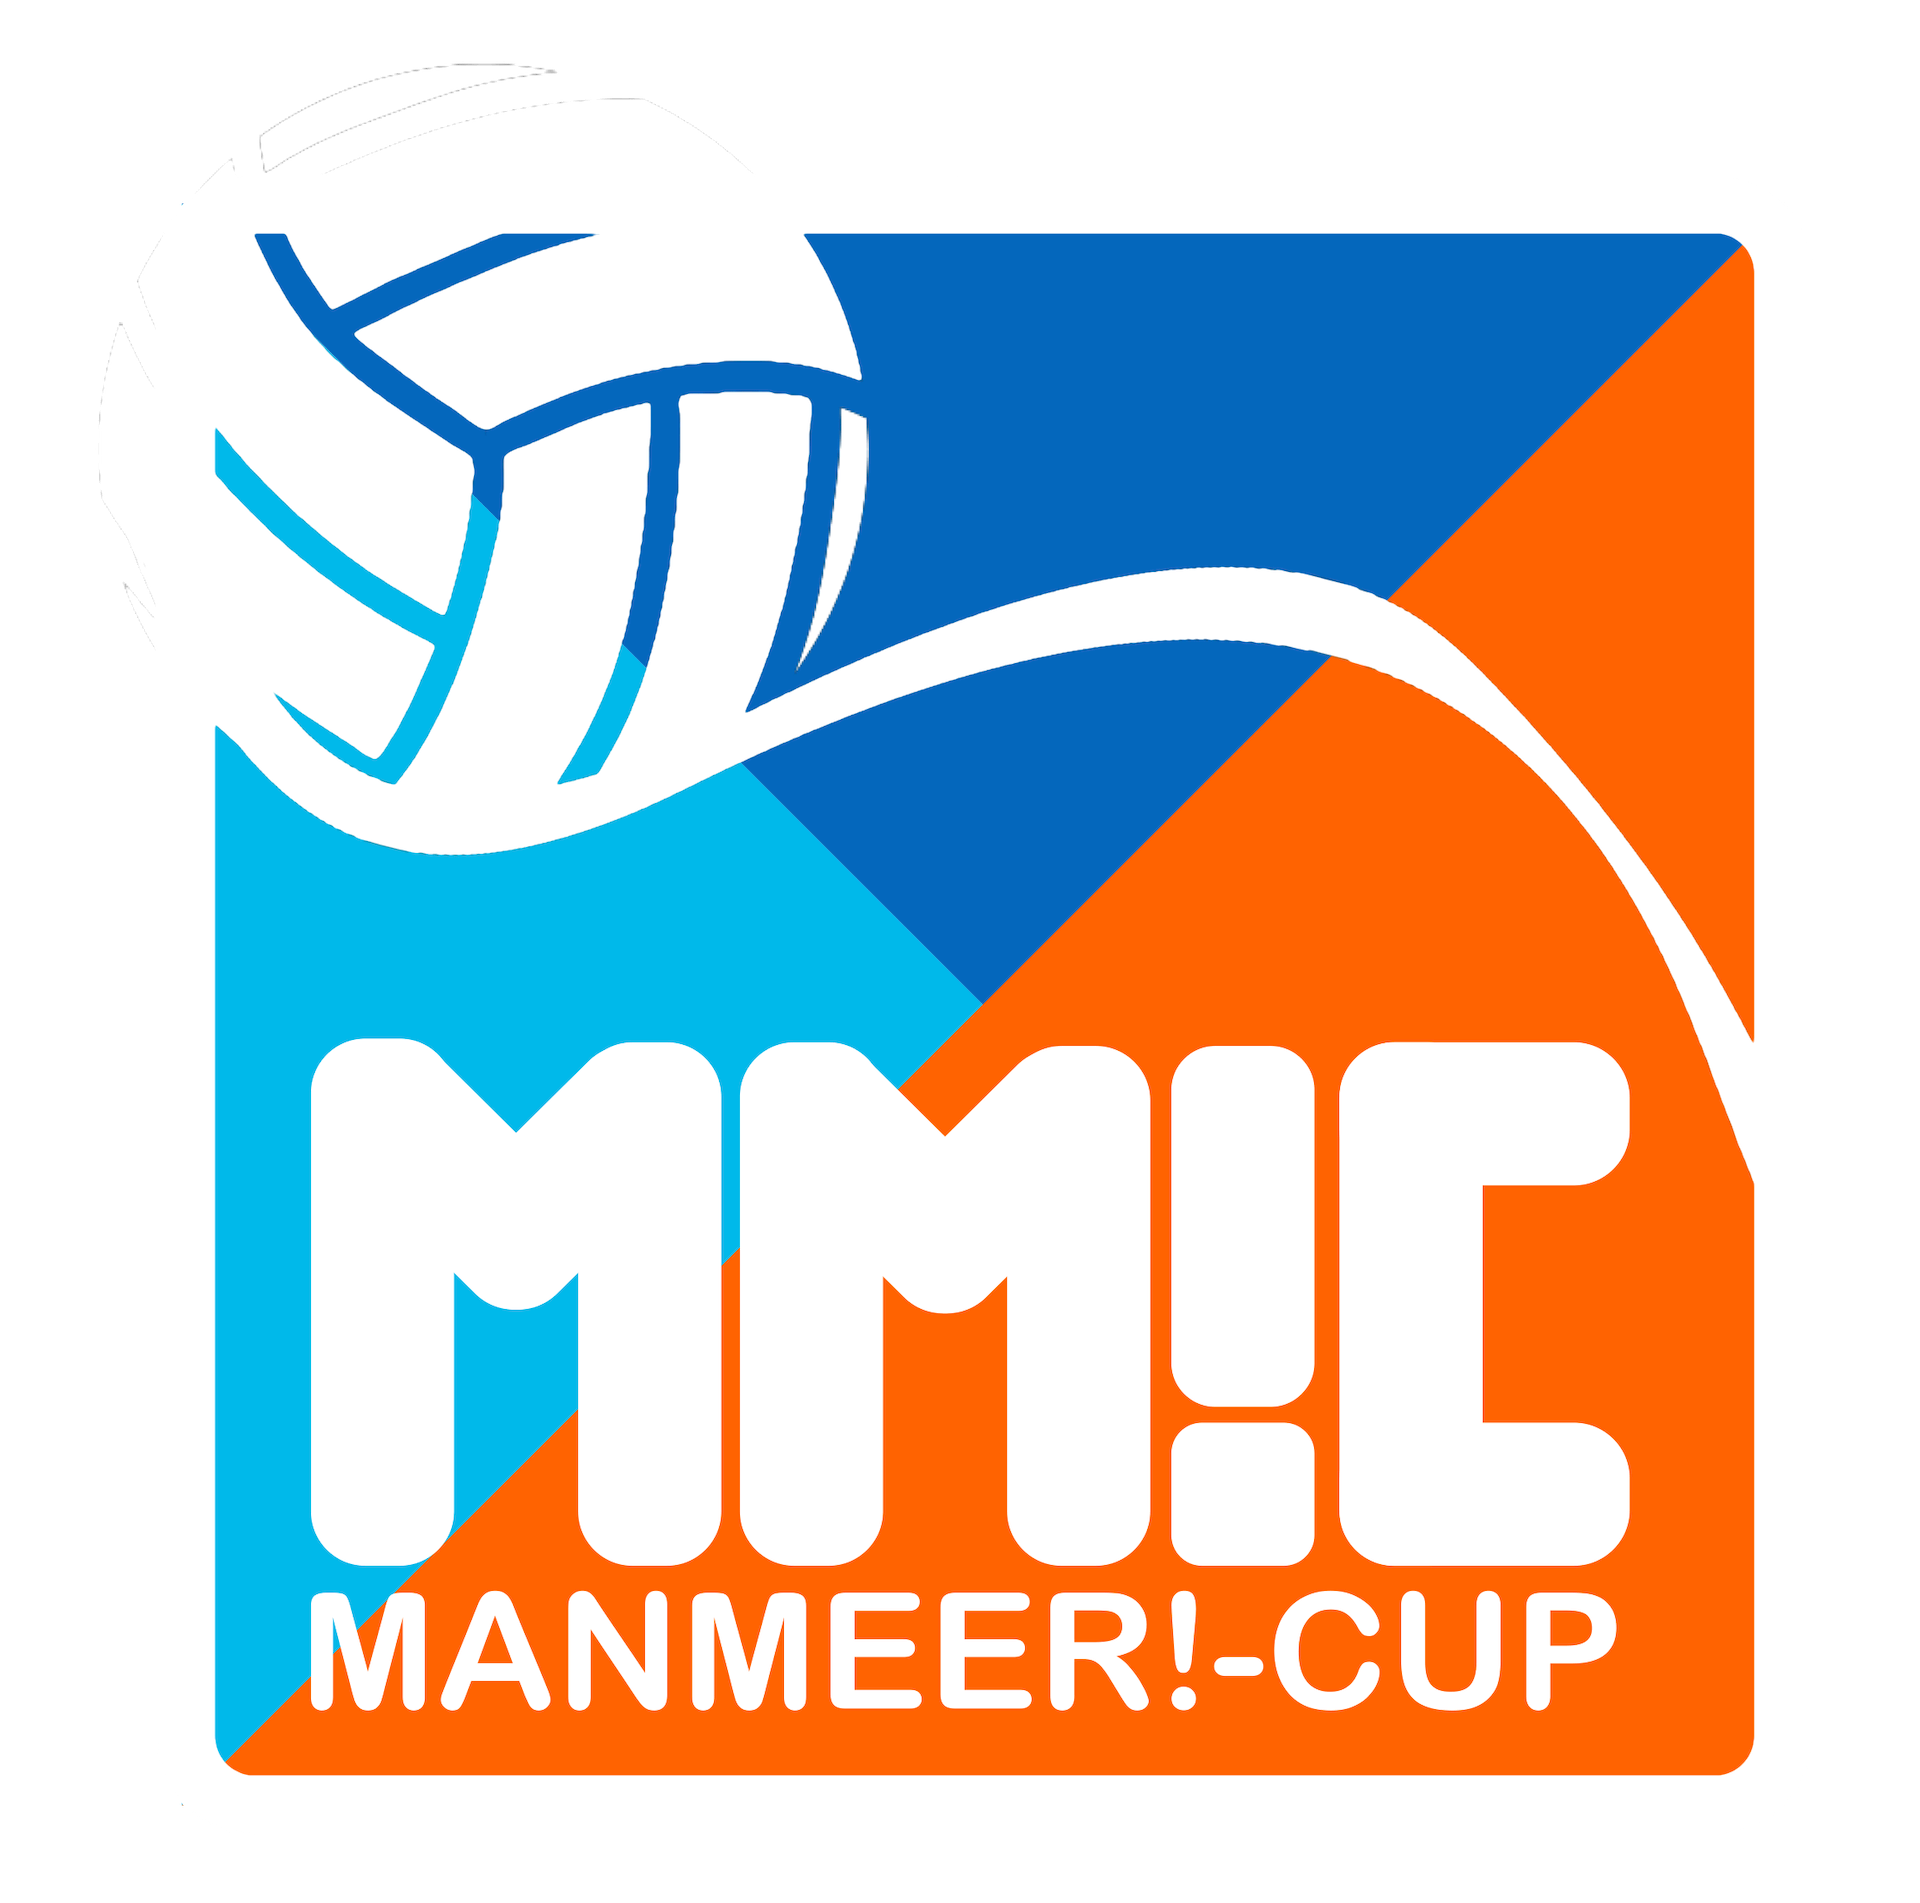 logo ManMeer!-Cup